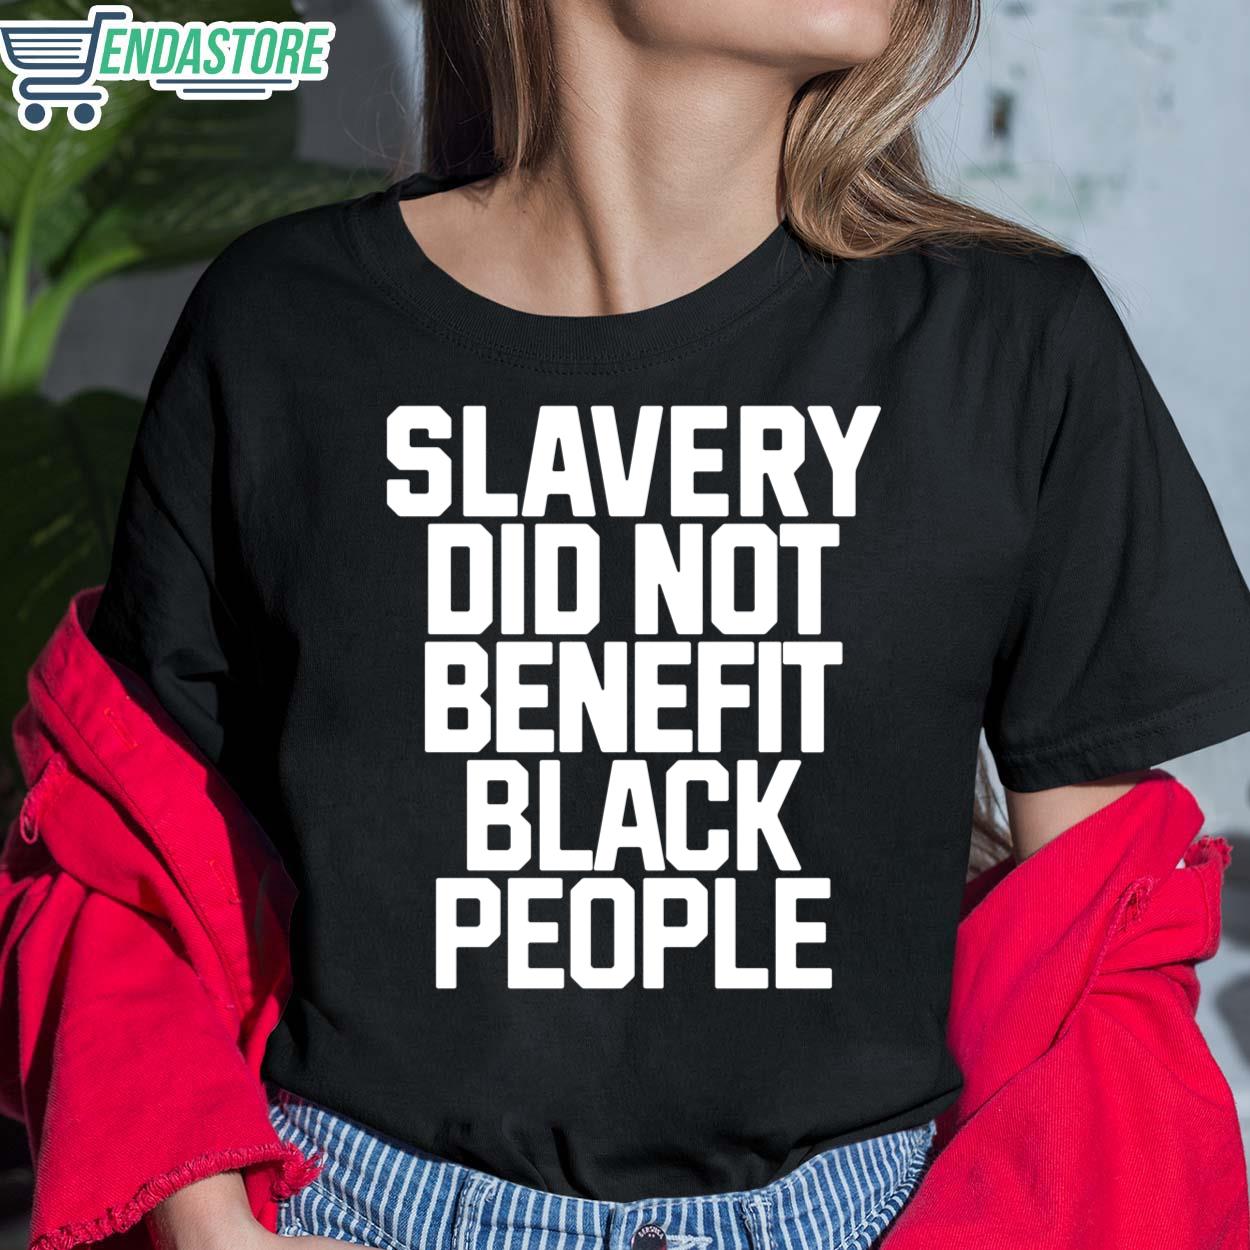 Slavery Did Not Benefit Black People T-Shirt - Endastore.com